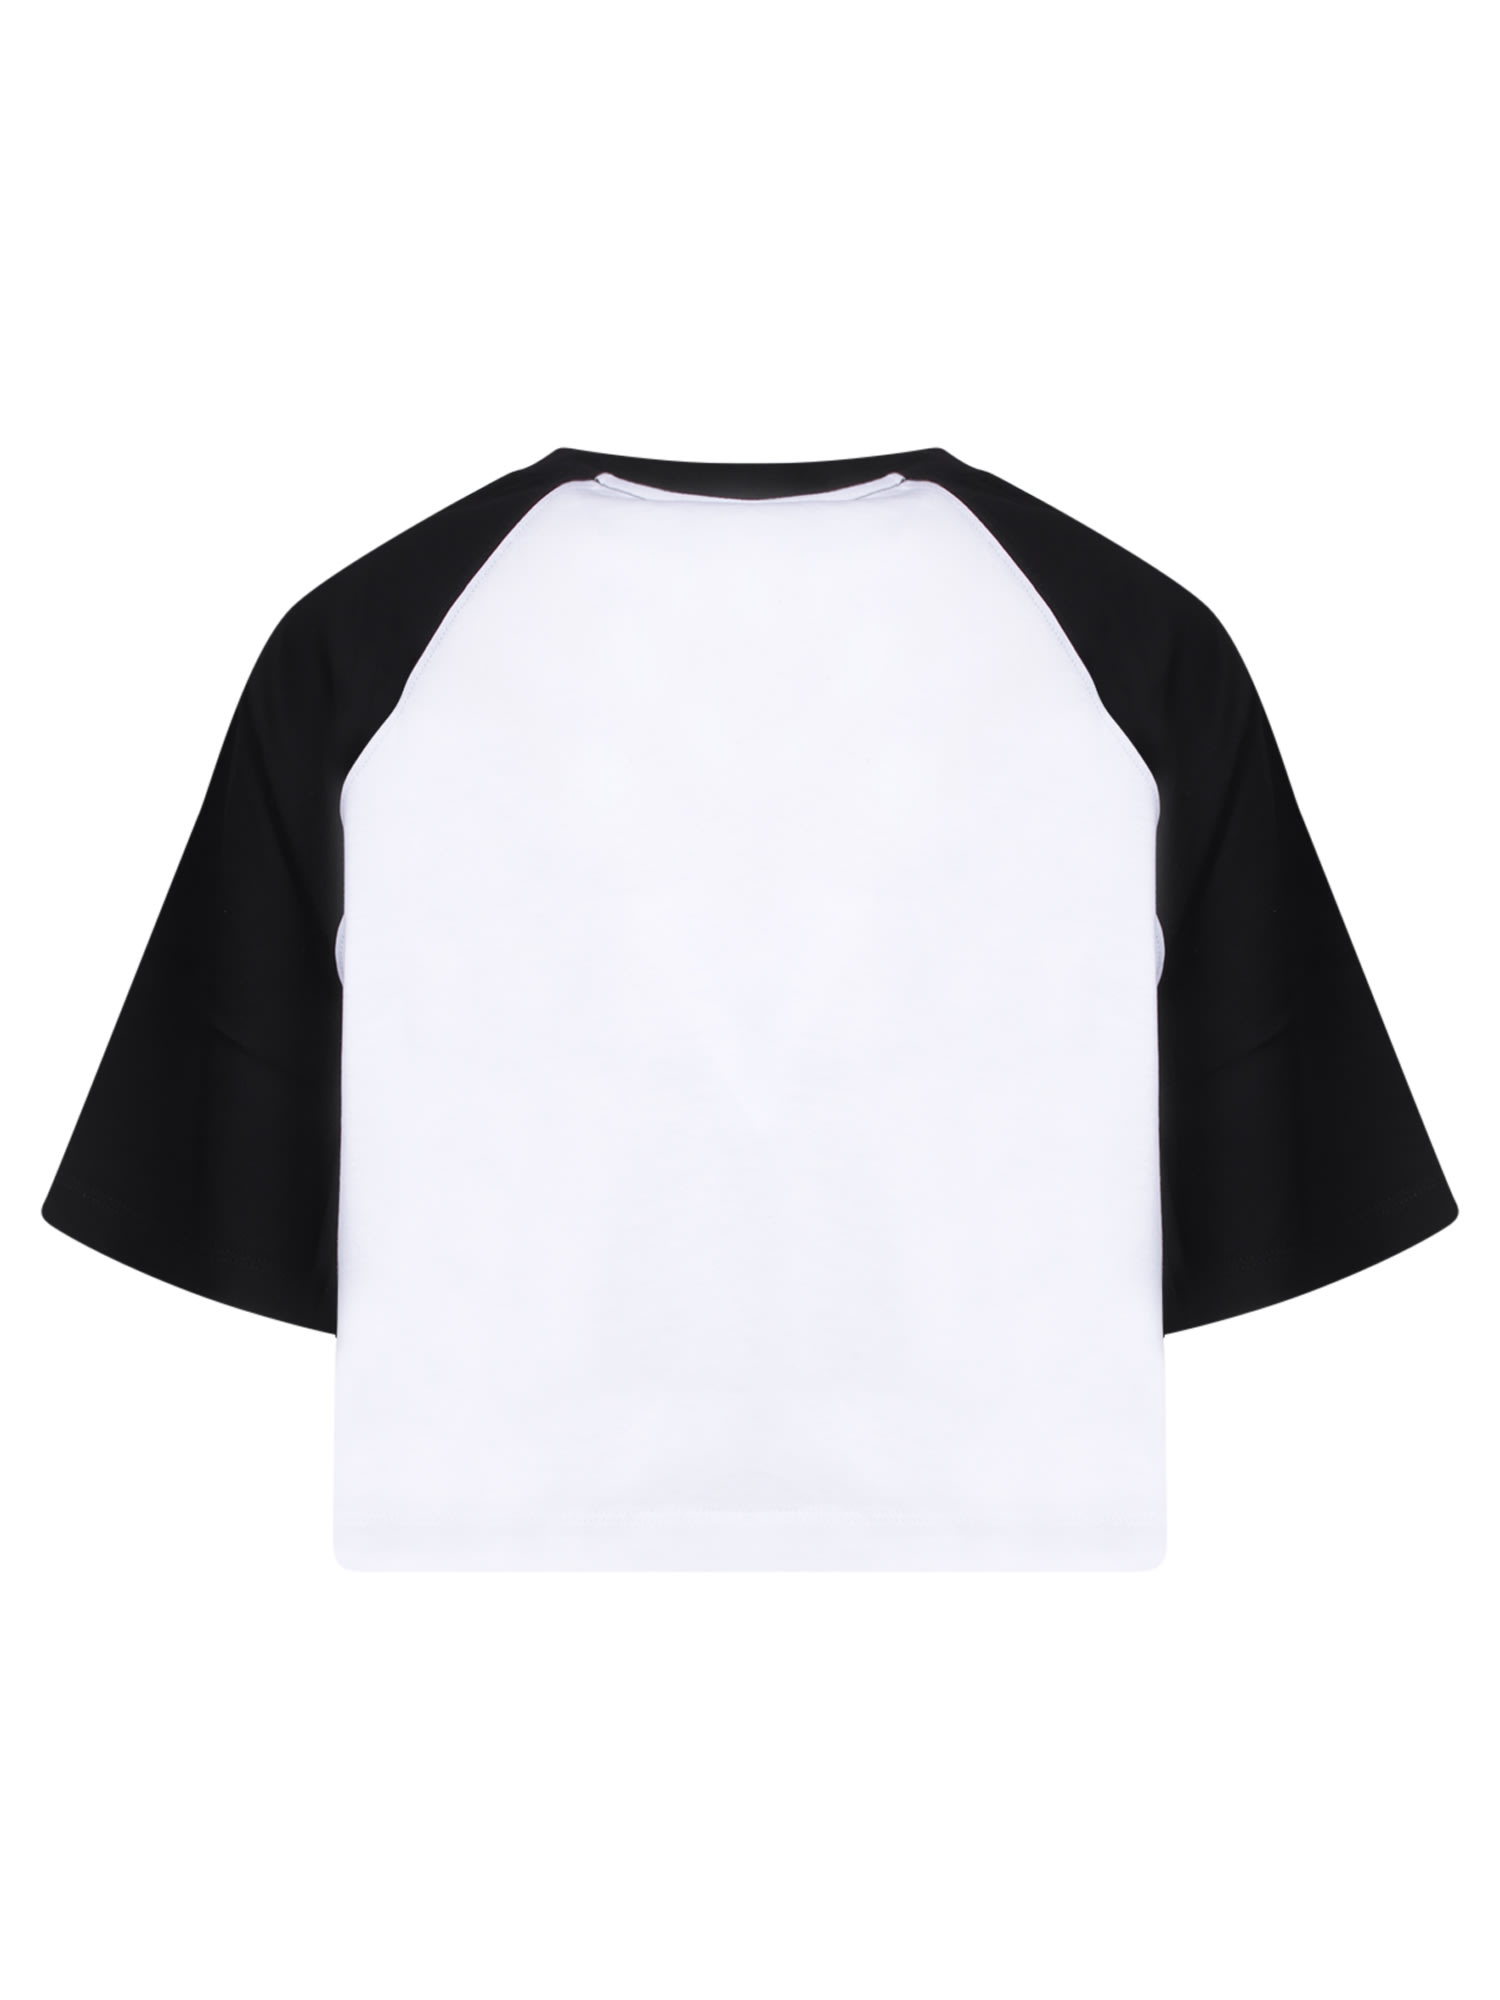 Shop Balmain Black And White Raglan Crop T-shirt